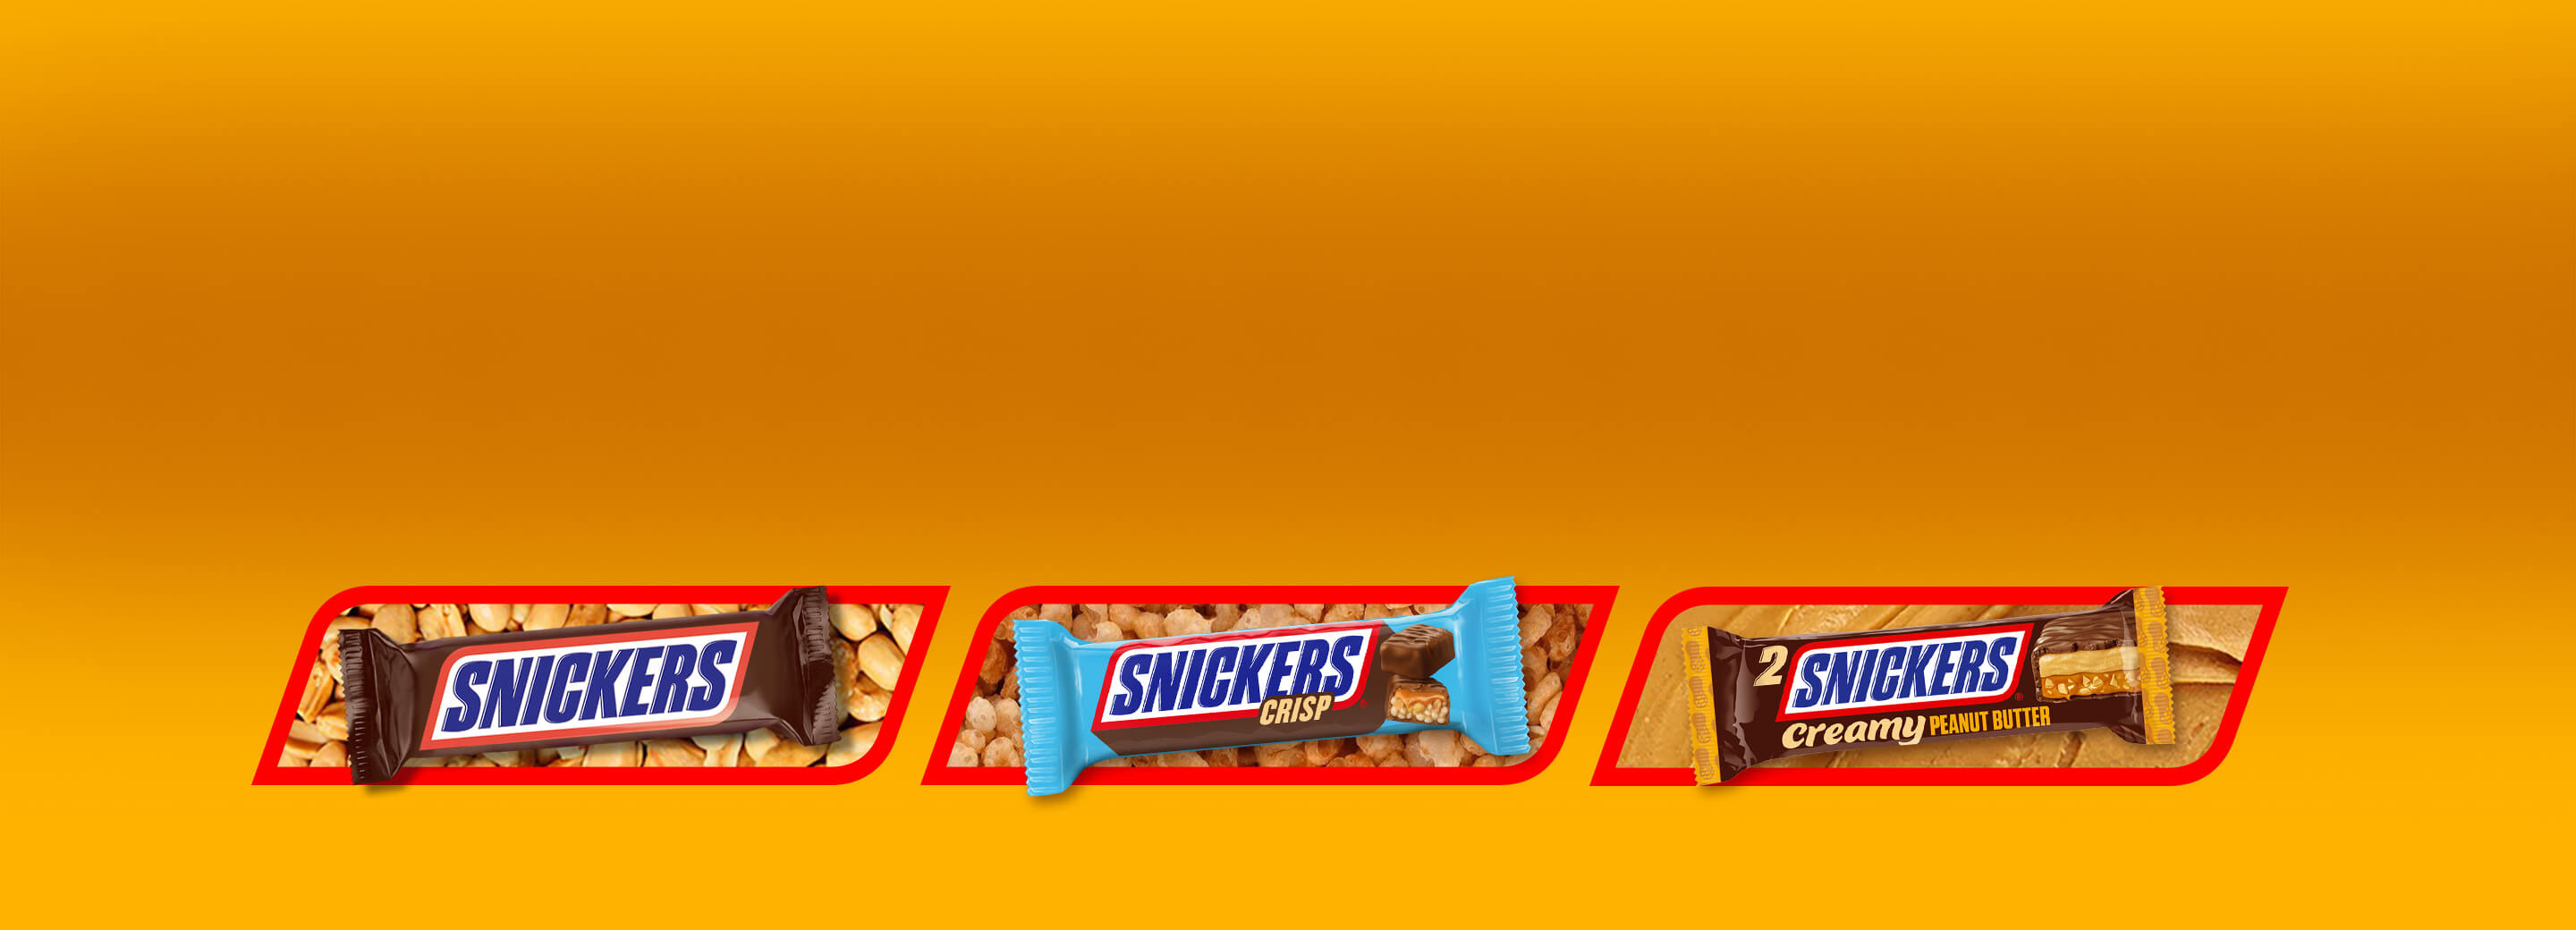 Reihenfolge unserer besten White snickers